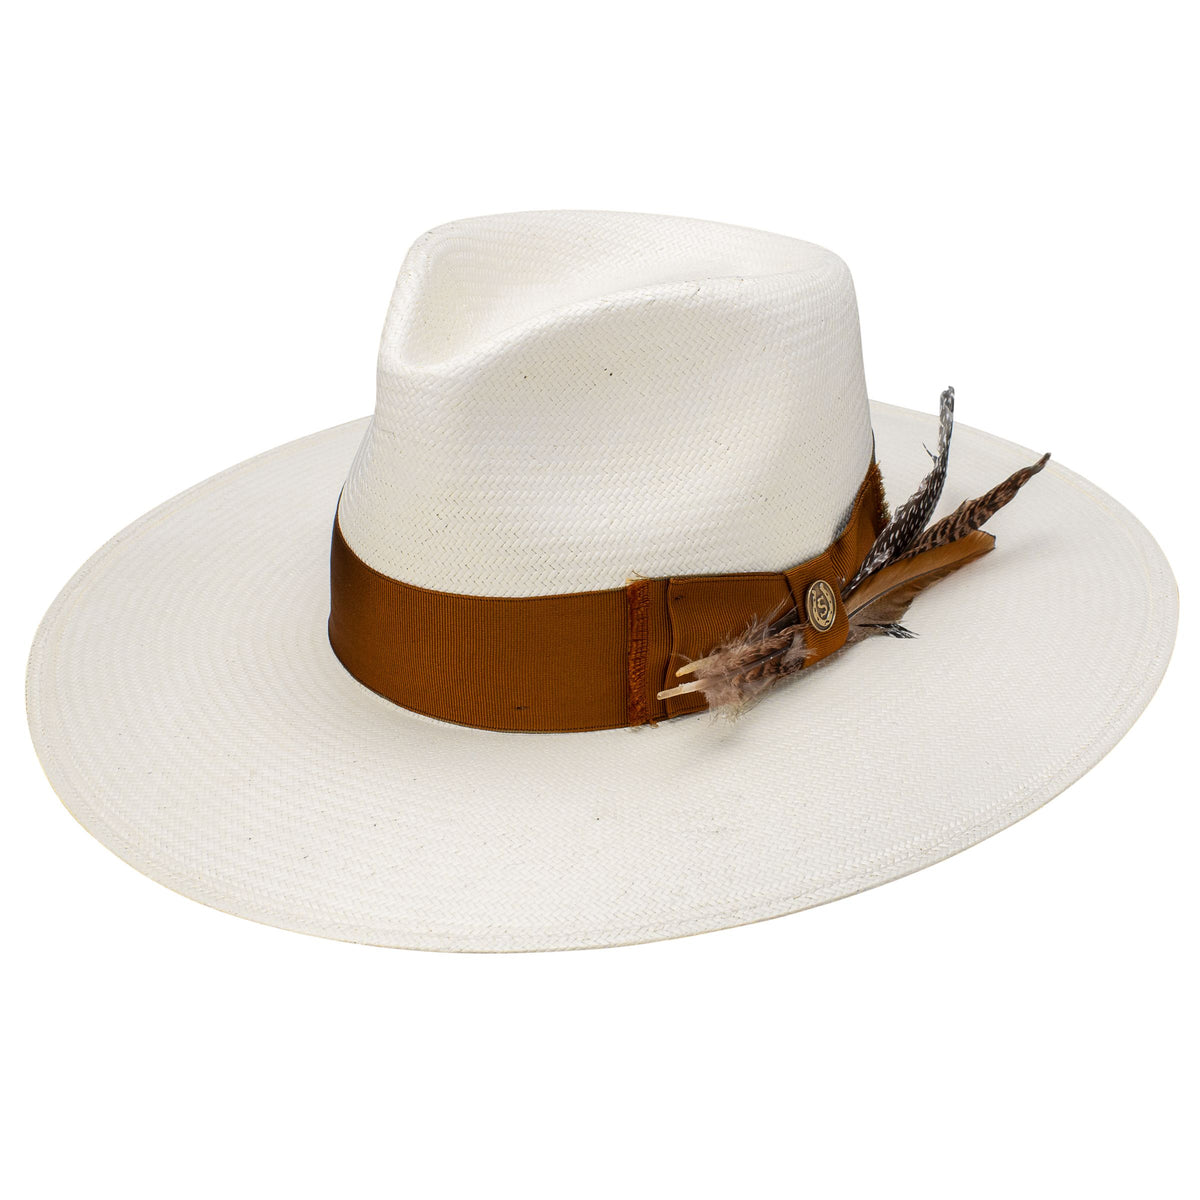 Stetson Atacama Fashion Straw Hat in Natural